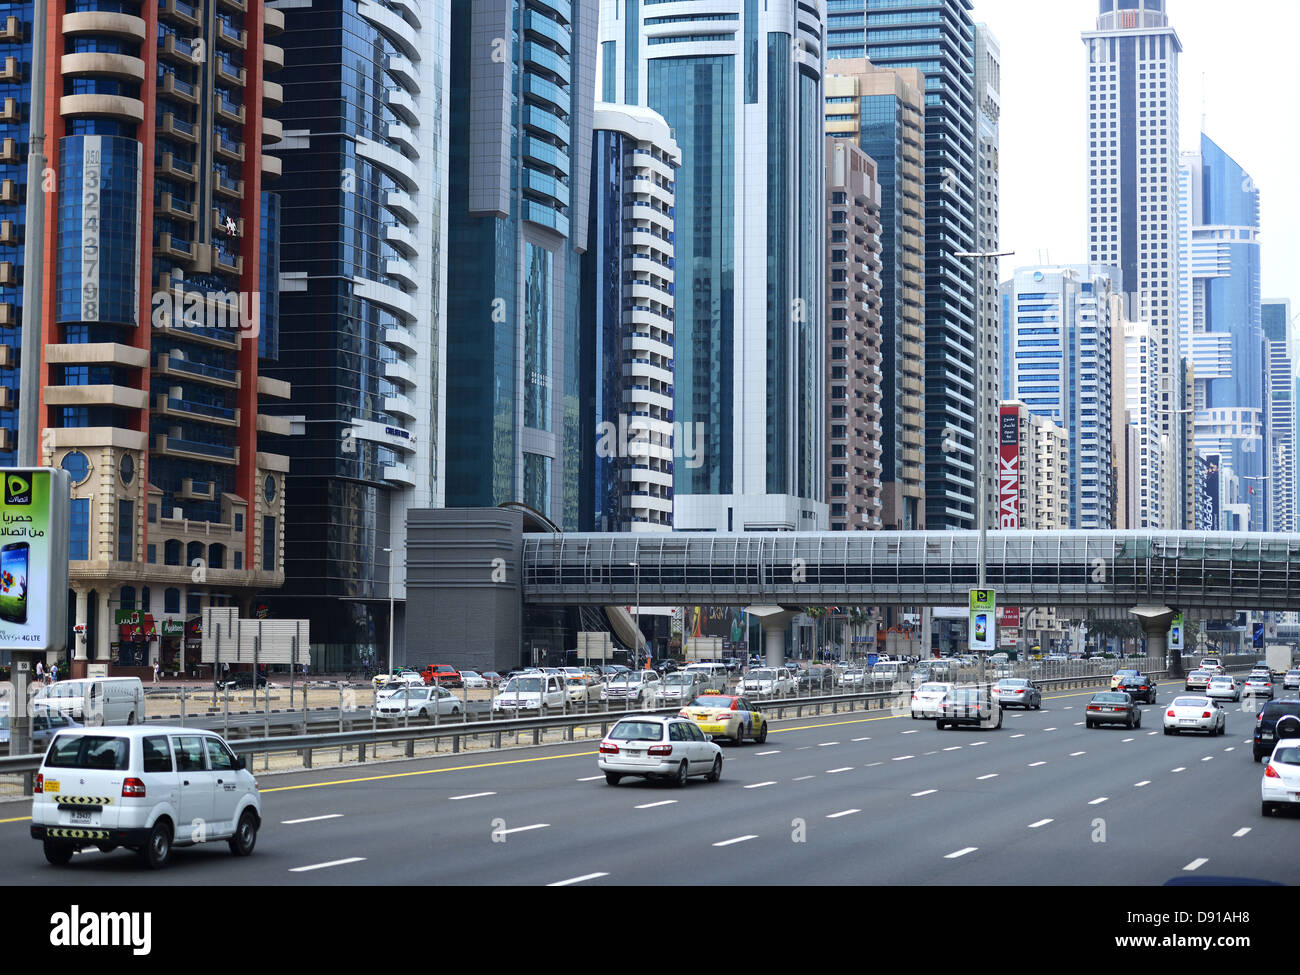 Dubai city, traffic on the streets of Dubai, United Arab Emirates Stock Photo